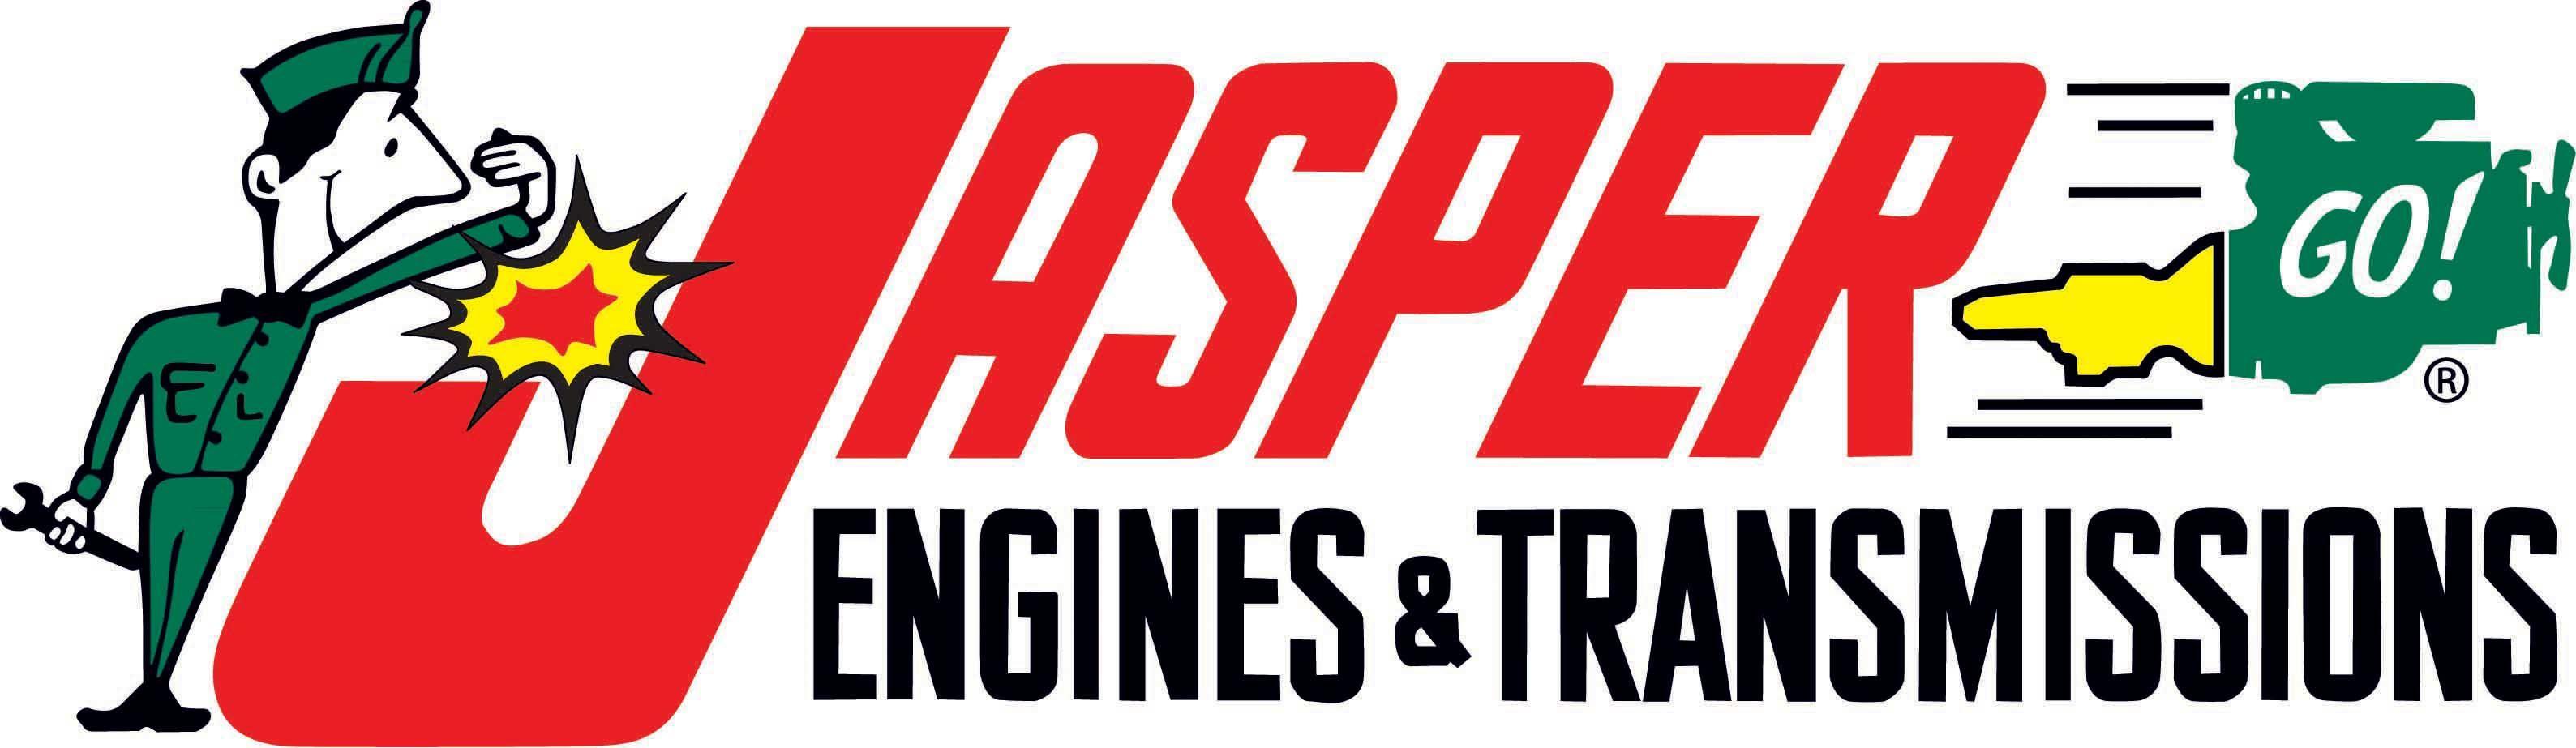 Jasper Logo - Jasper Engines And Transmissions Co Op Program